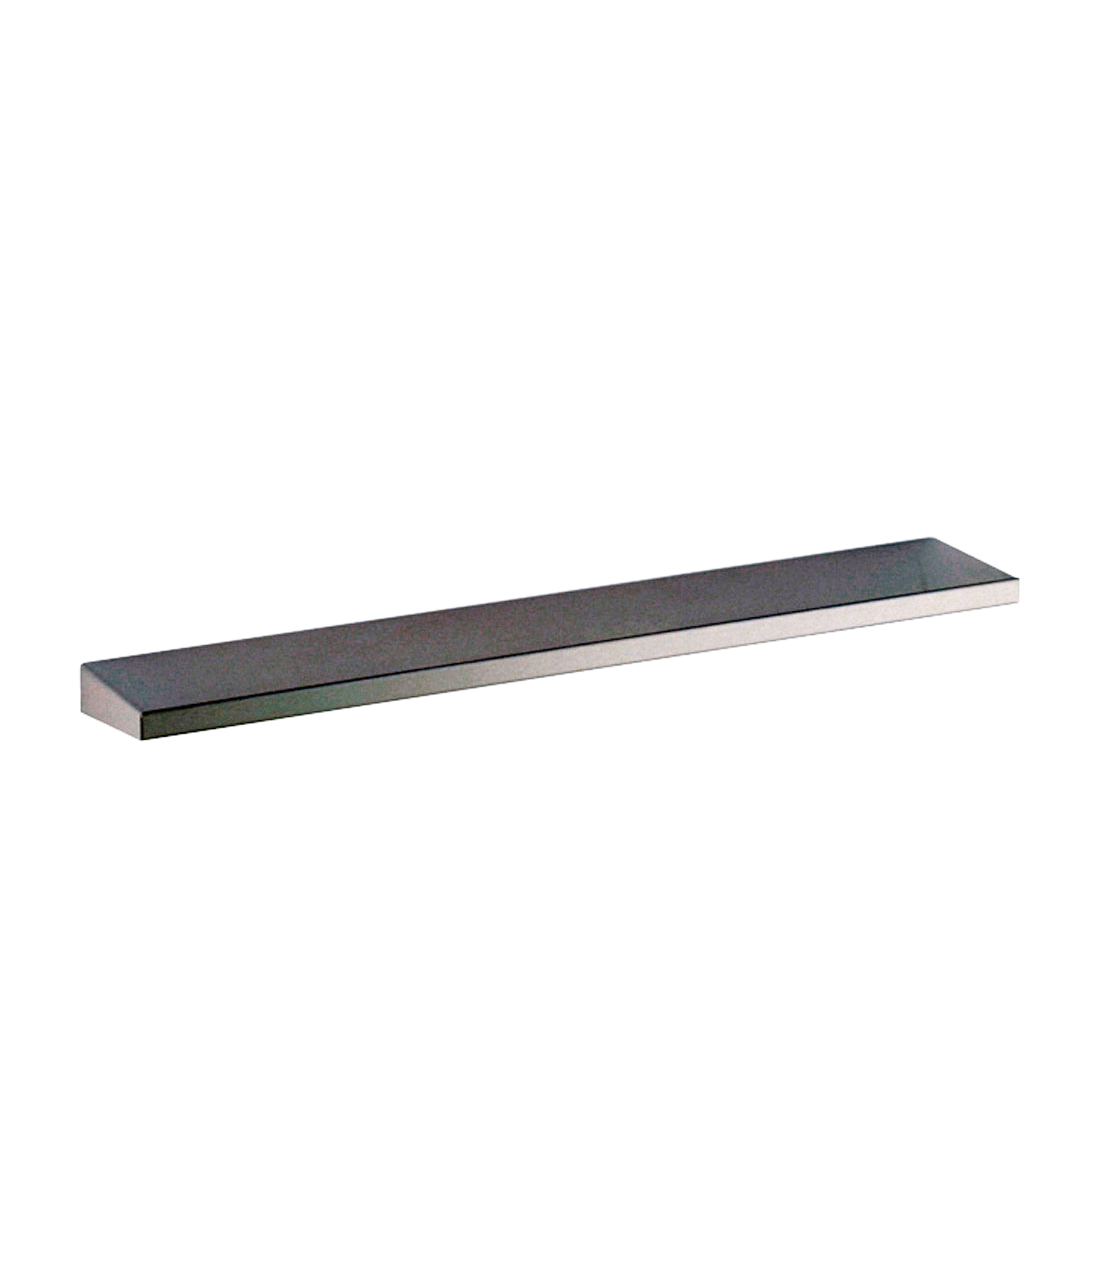 Stainless Steel Mirror Shelf - (Model #: ms-24) Image